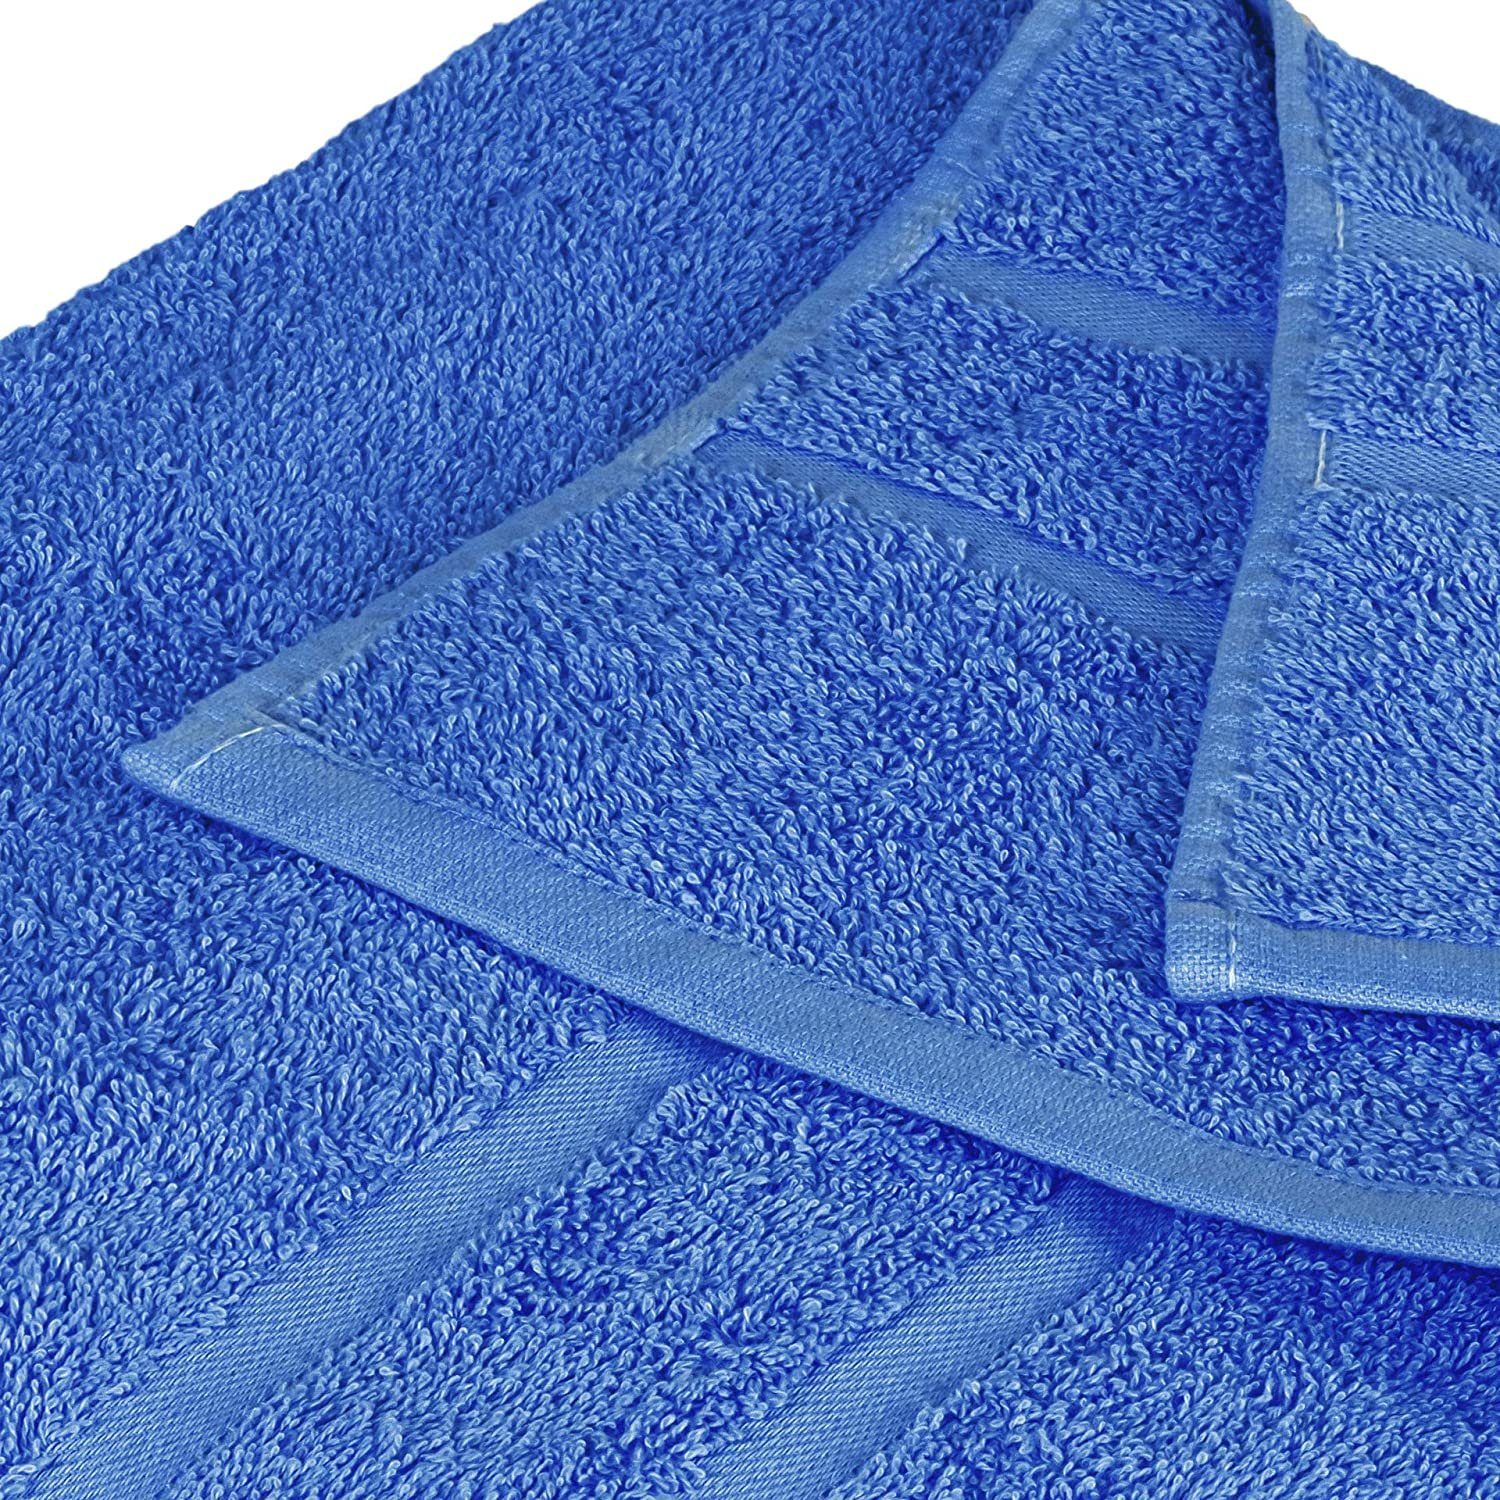 Badetücher Set 100% Saunatücher 12er StickandShine Blau 2x SET Handtuch Handtuch 500 GSM Frottee 2x (12 in Duschtücher 4x als GSM Teilig) verschiedenen 100% 500 Baumwolle 2x Baumwolle 2x Farben Handtücher Gästehandtuch Pack,